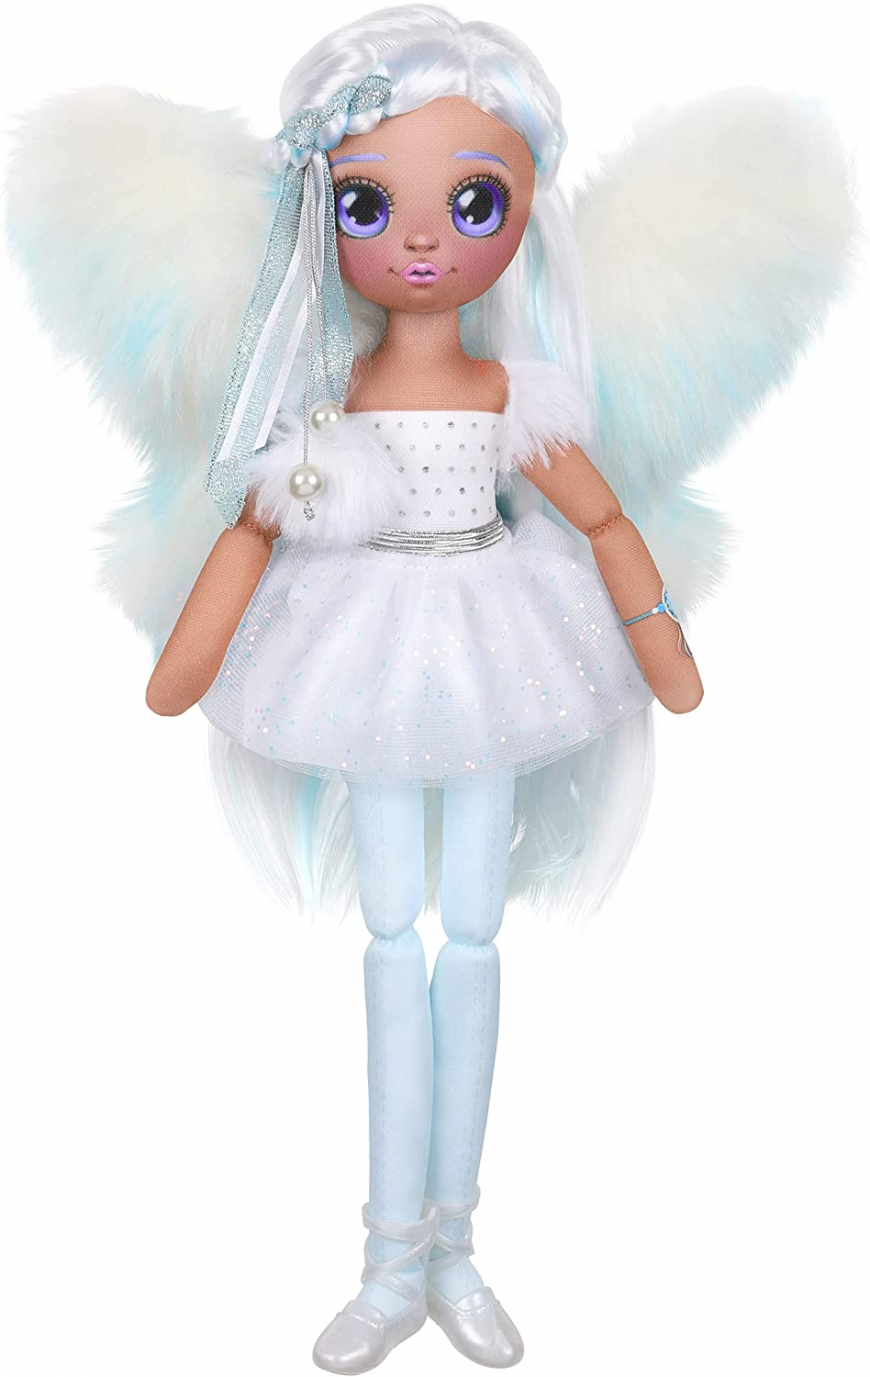 Dream Seekers Luna new version 2021 doll